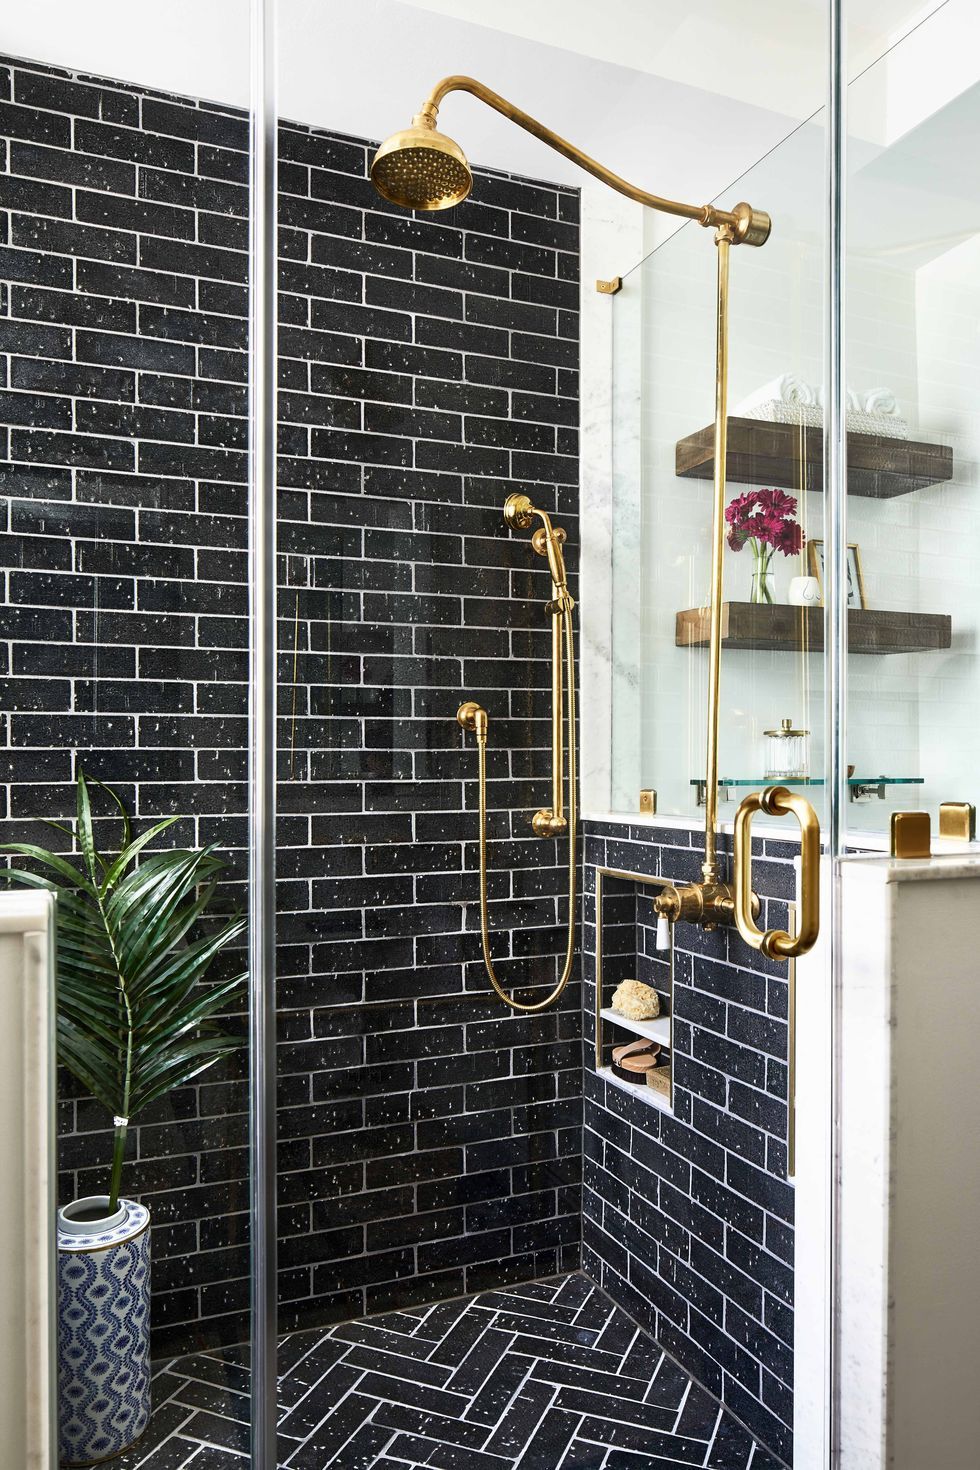 Creative Bathroom Tile Design Ideas, Tile Ideas For Bathrooms